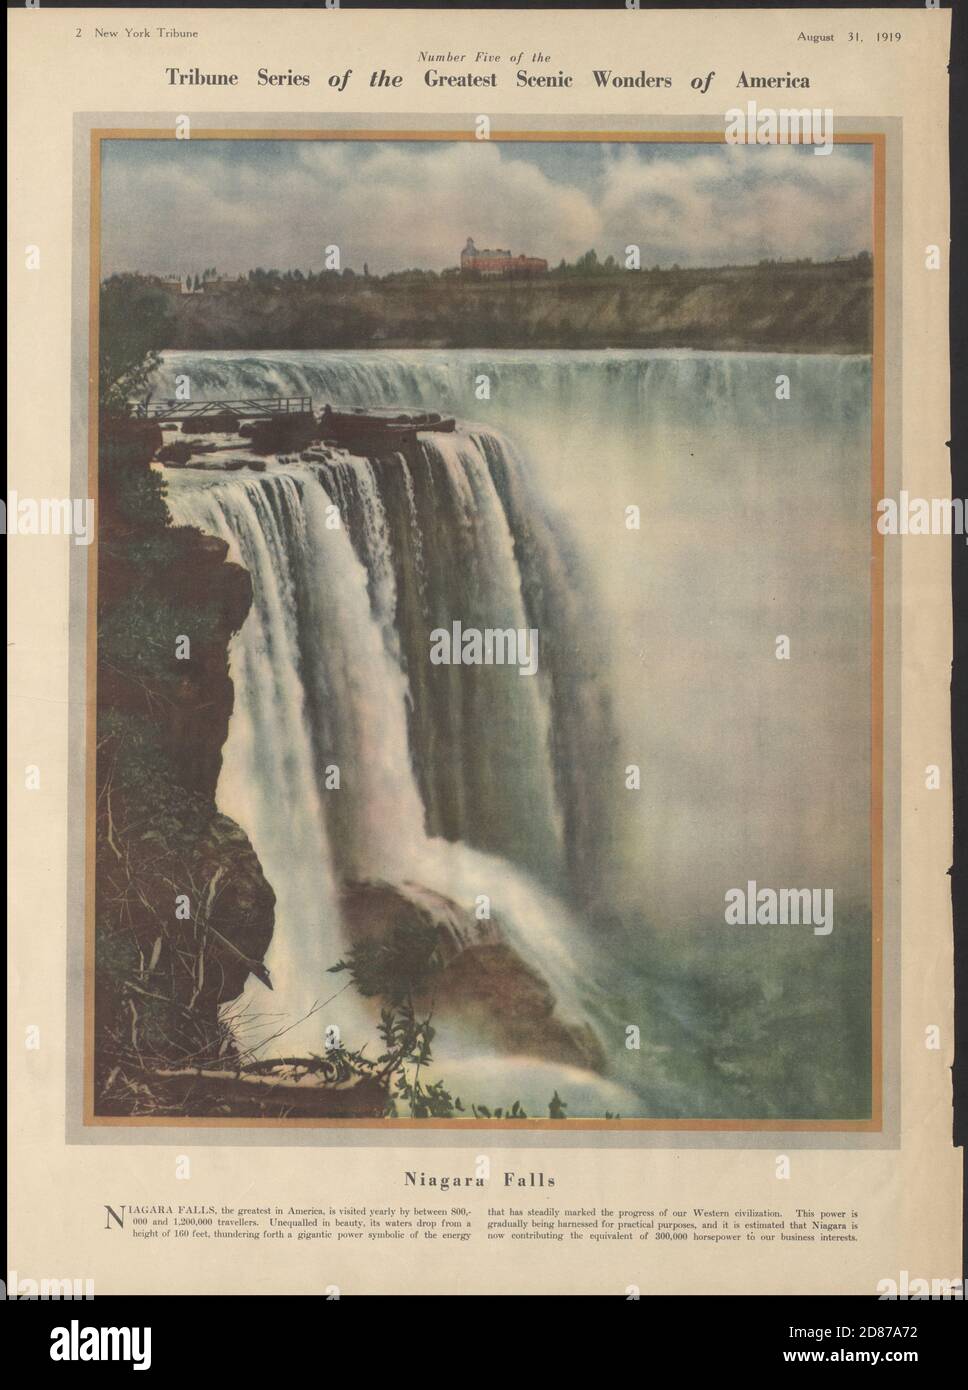 Niagara Falls, Ontario, New York Tribune page, Tribune Series of the Greatest Scenic Wonders of America, waterfall. August 31, 1919. Stock Photo